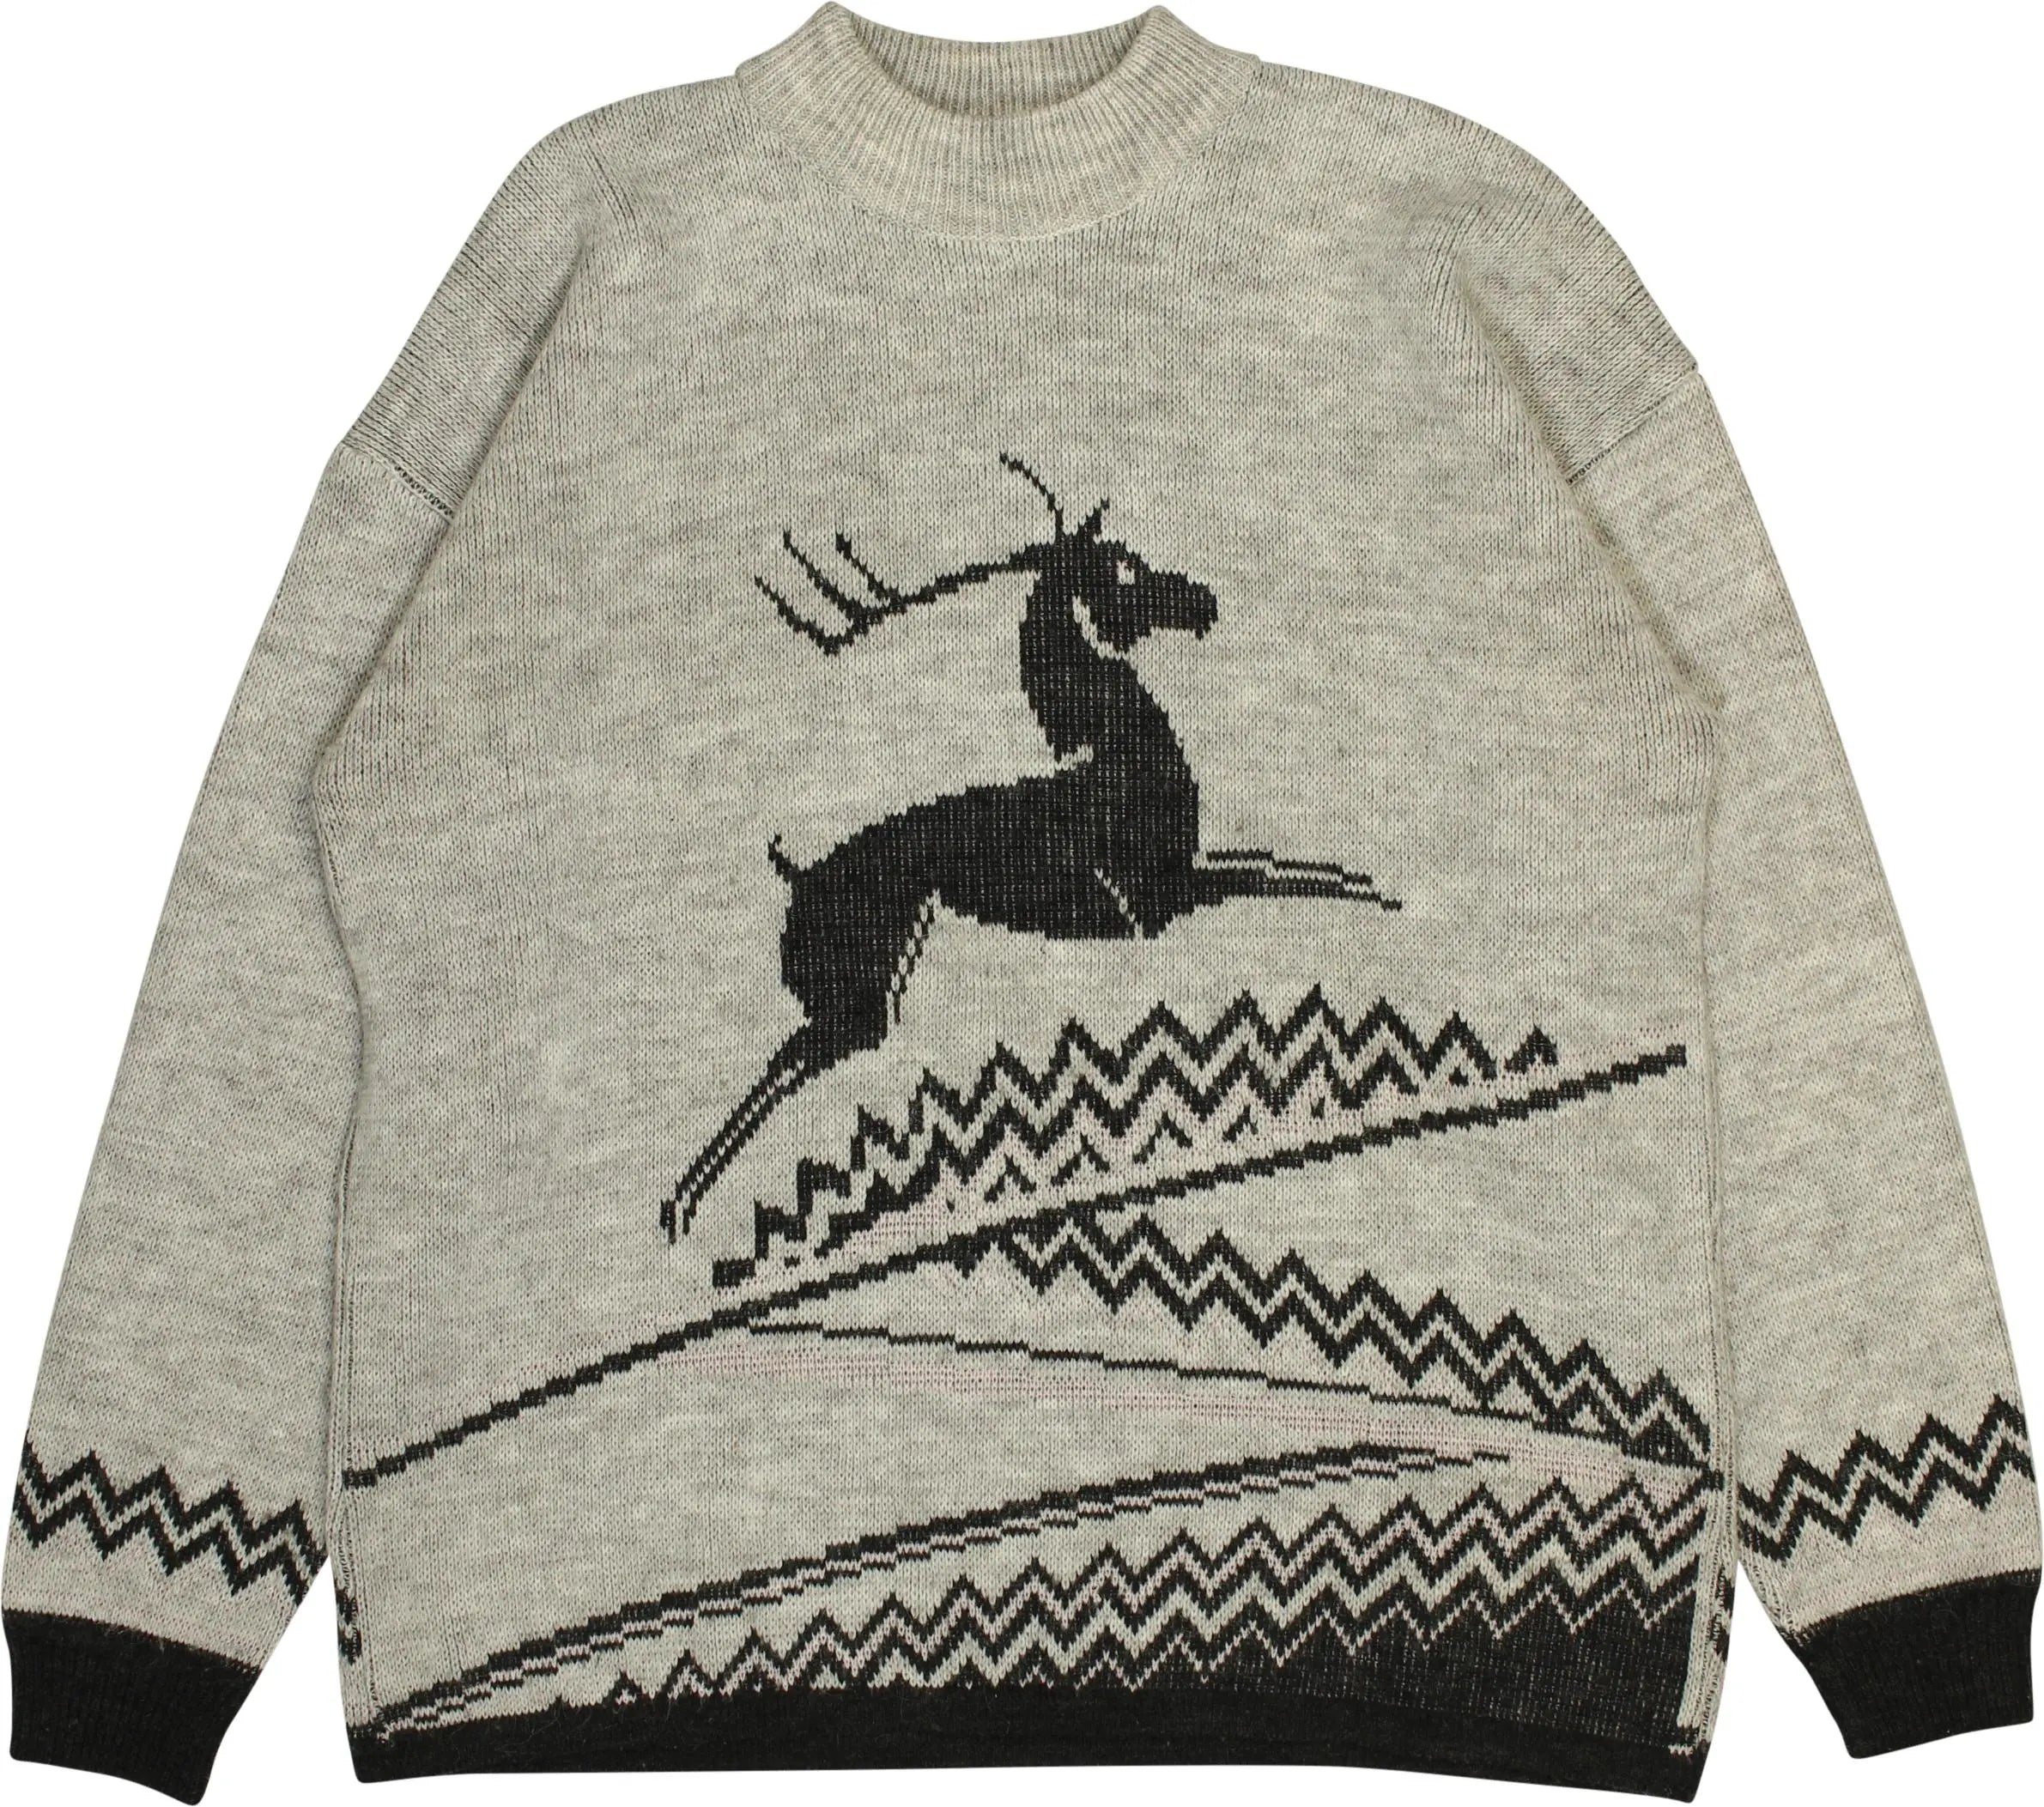 Franc & Albert - 90s Wool Blend Reindeer Jumper- ThriftTale.com - Vintage and second handclothing